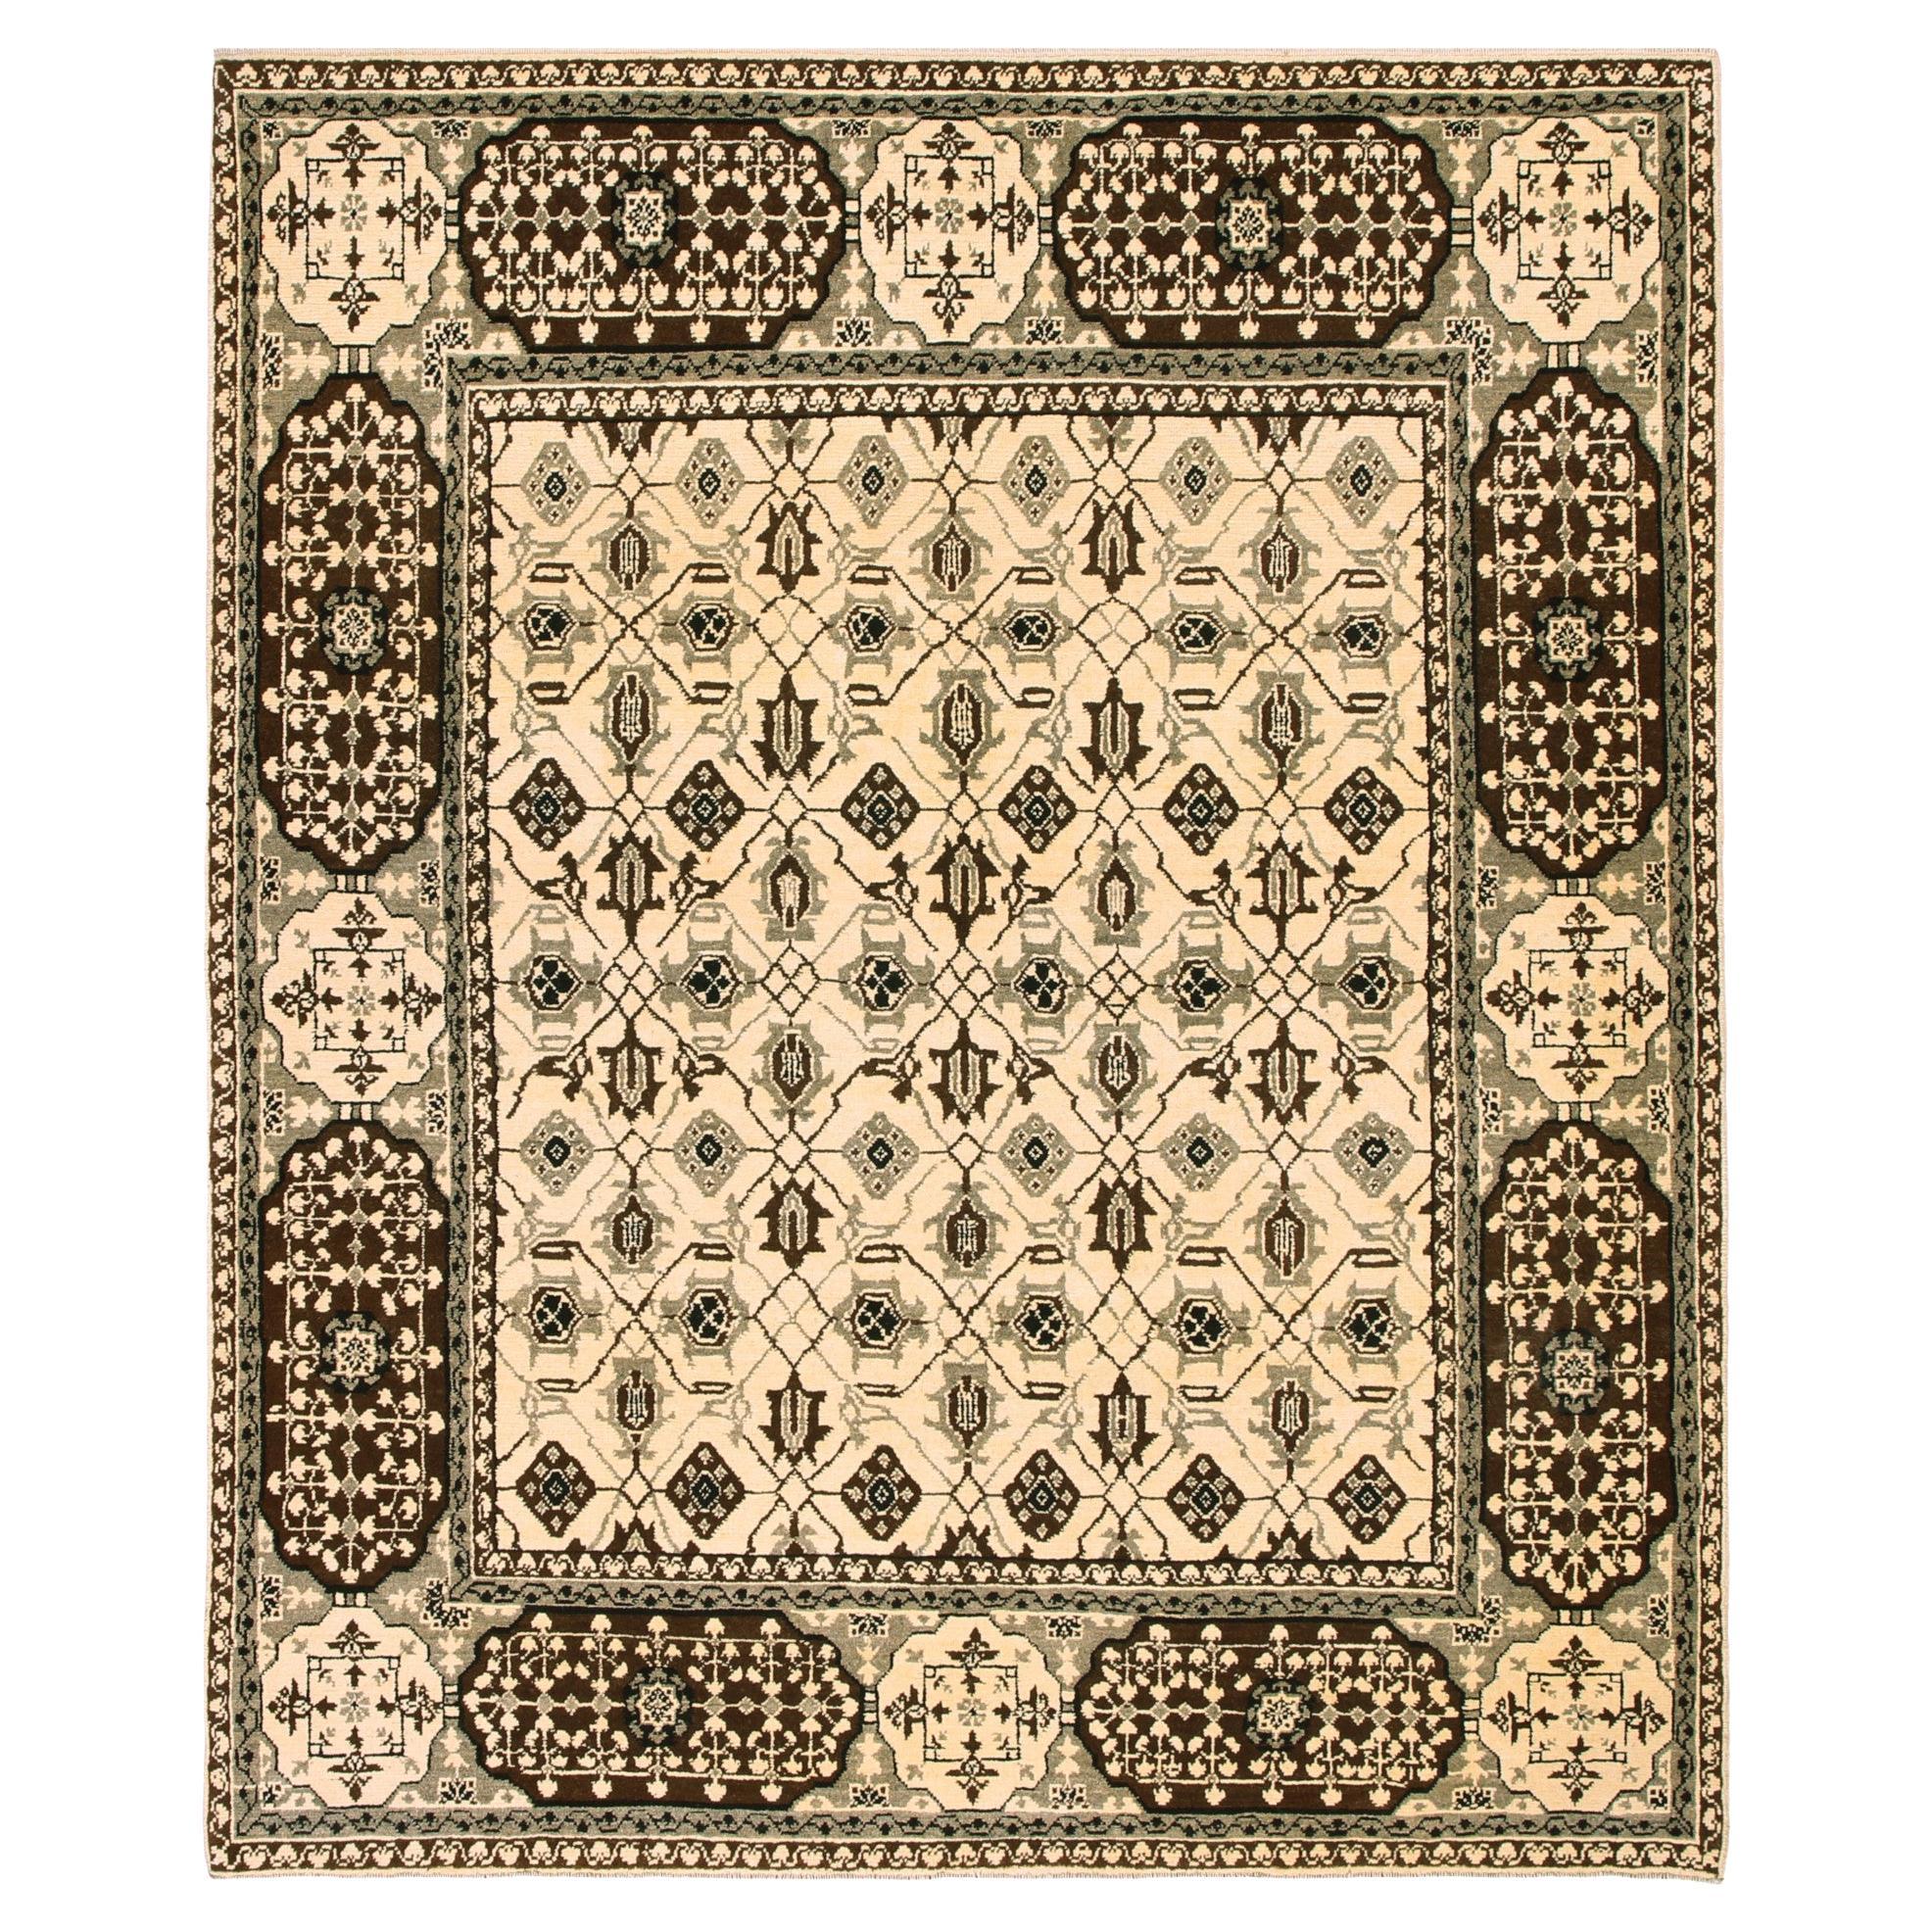 Ararat Rugs Mamluk Carpet with Lattice Design, Natural Sheep Wool Colors No Dye For Sale